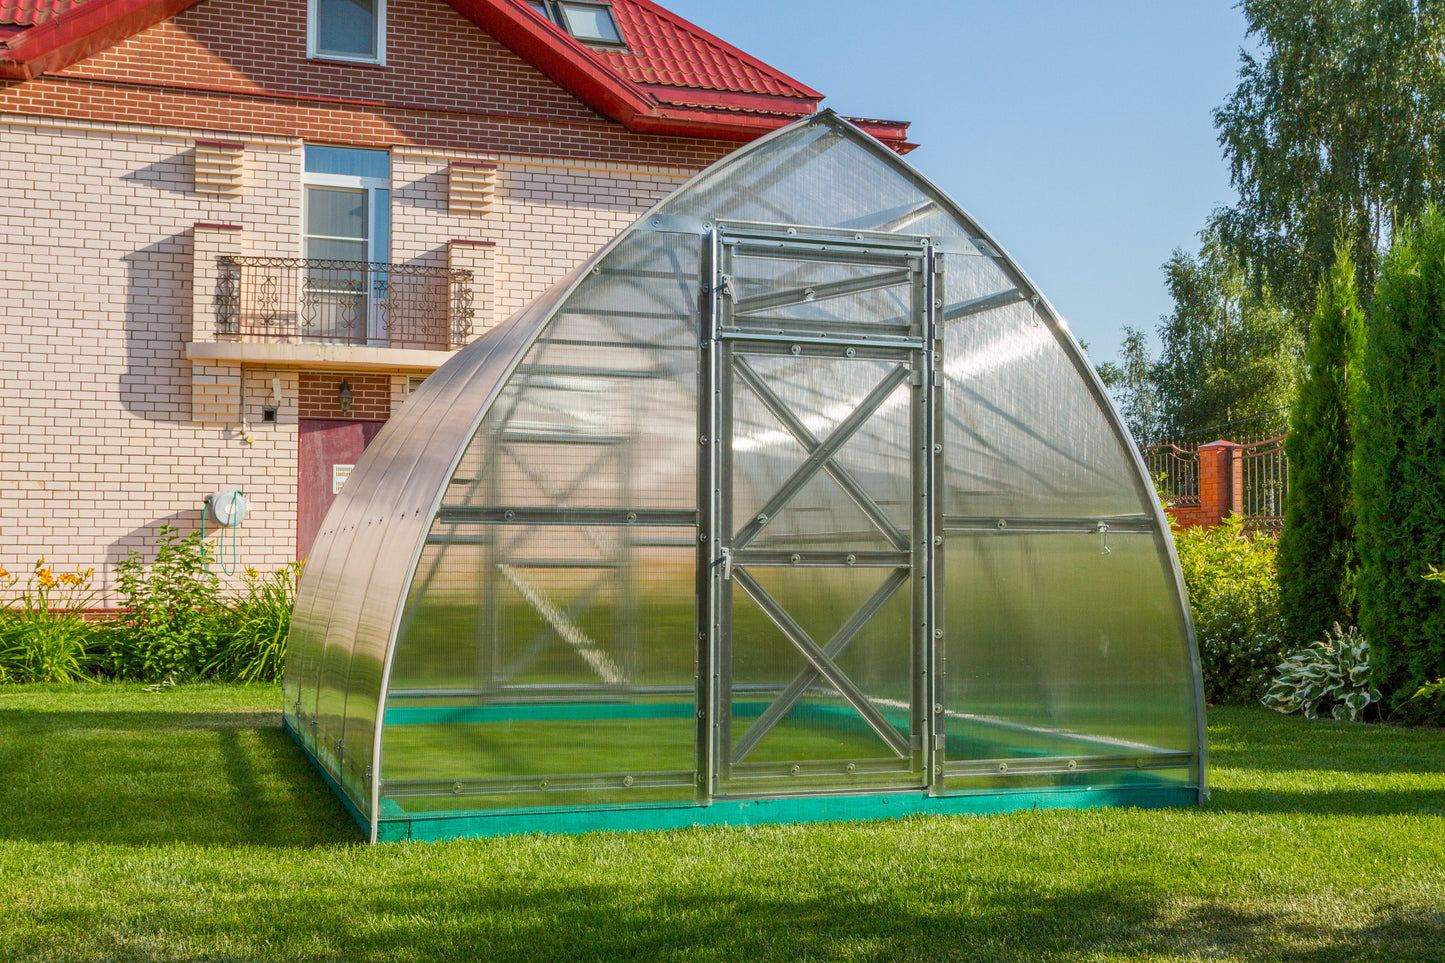 Sungrow Compact Greenhouse